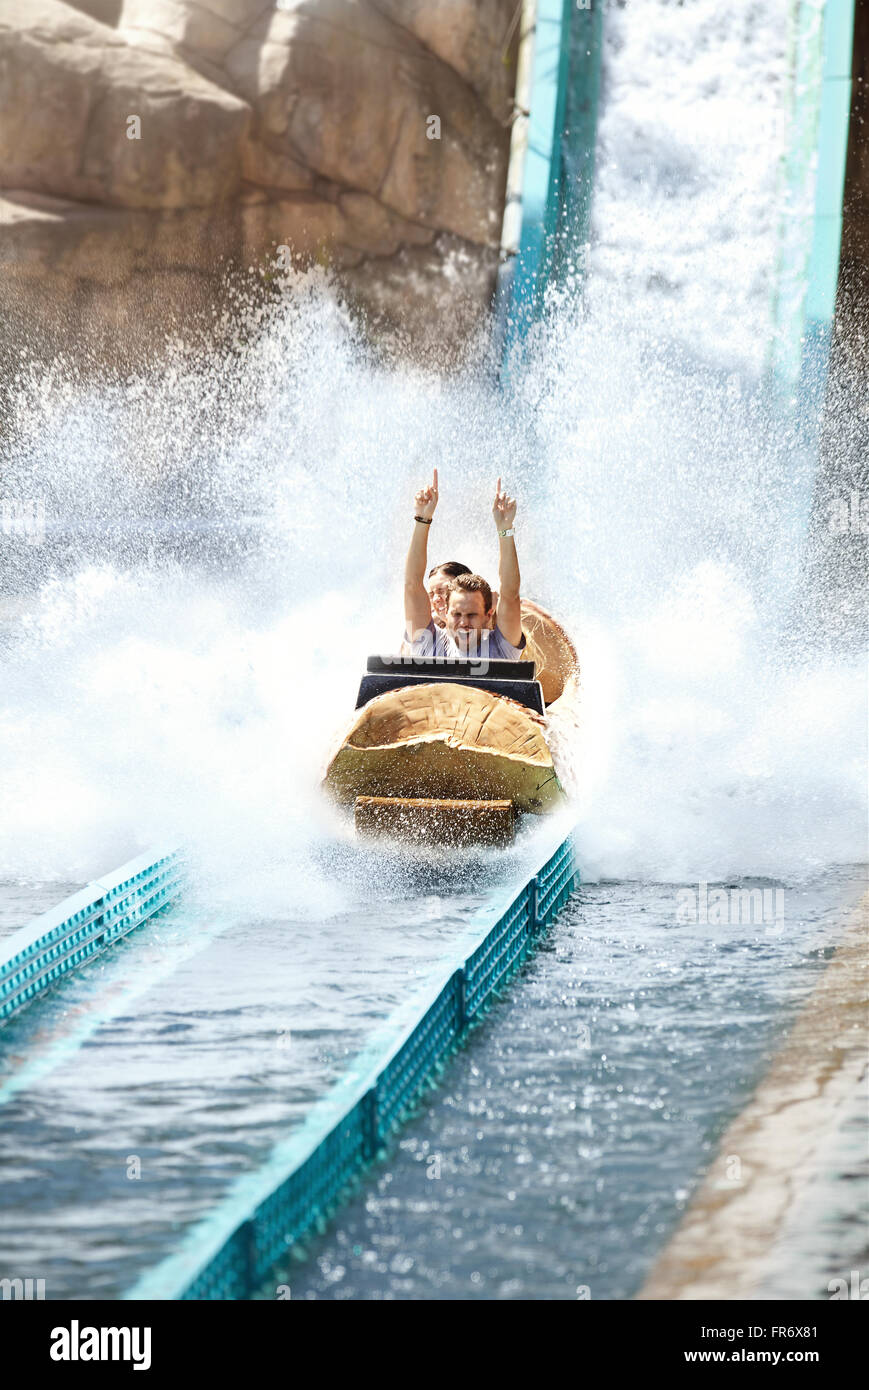 Enthusiastic young man riding water log amusement park ride Stock Photo